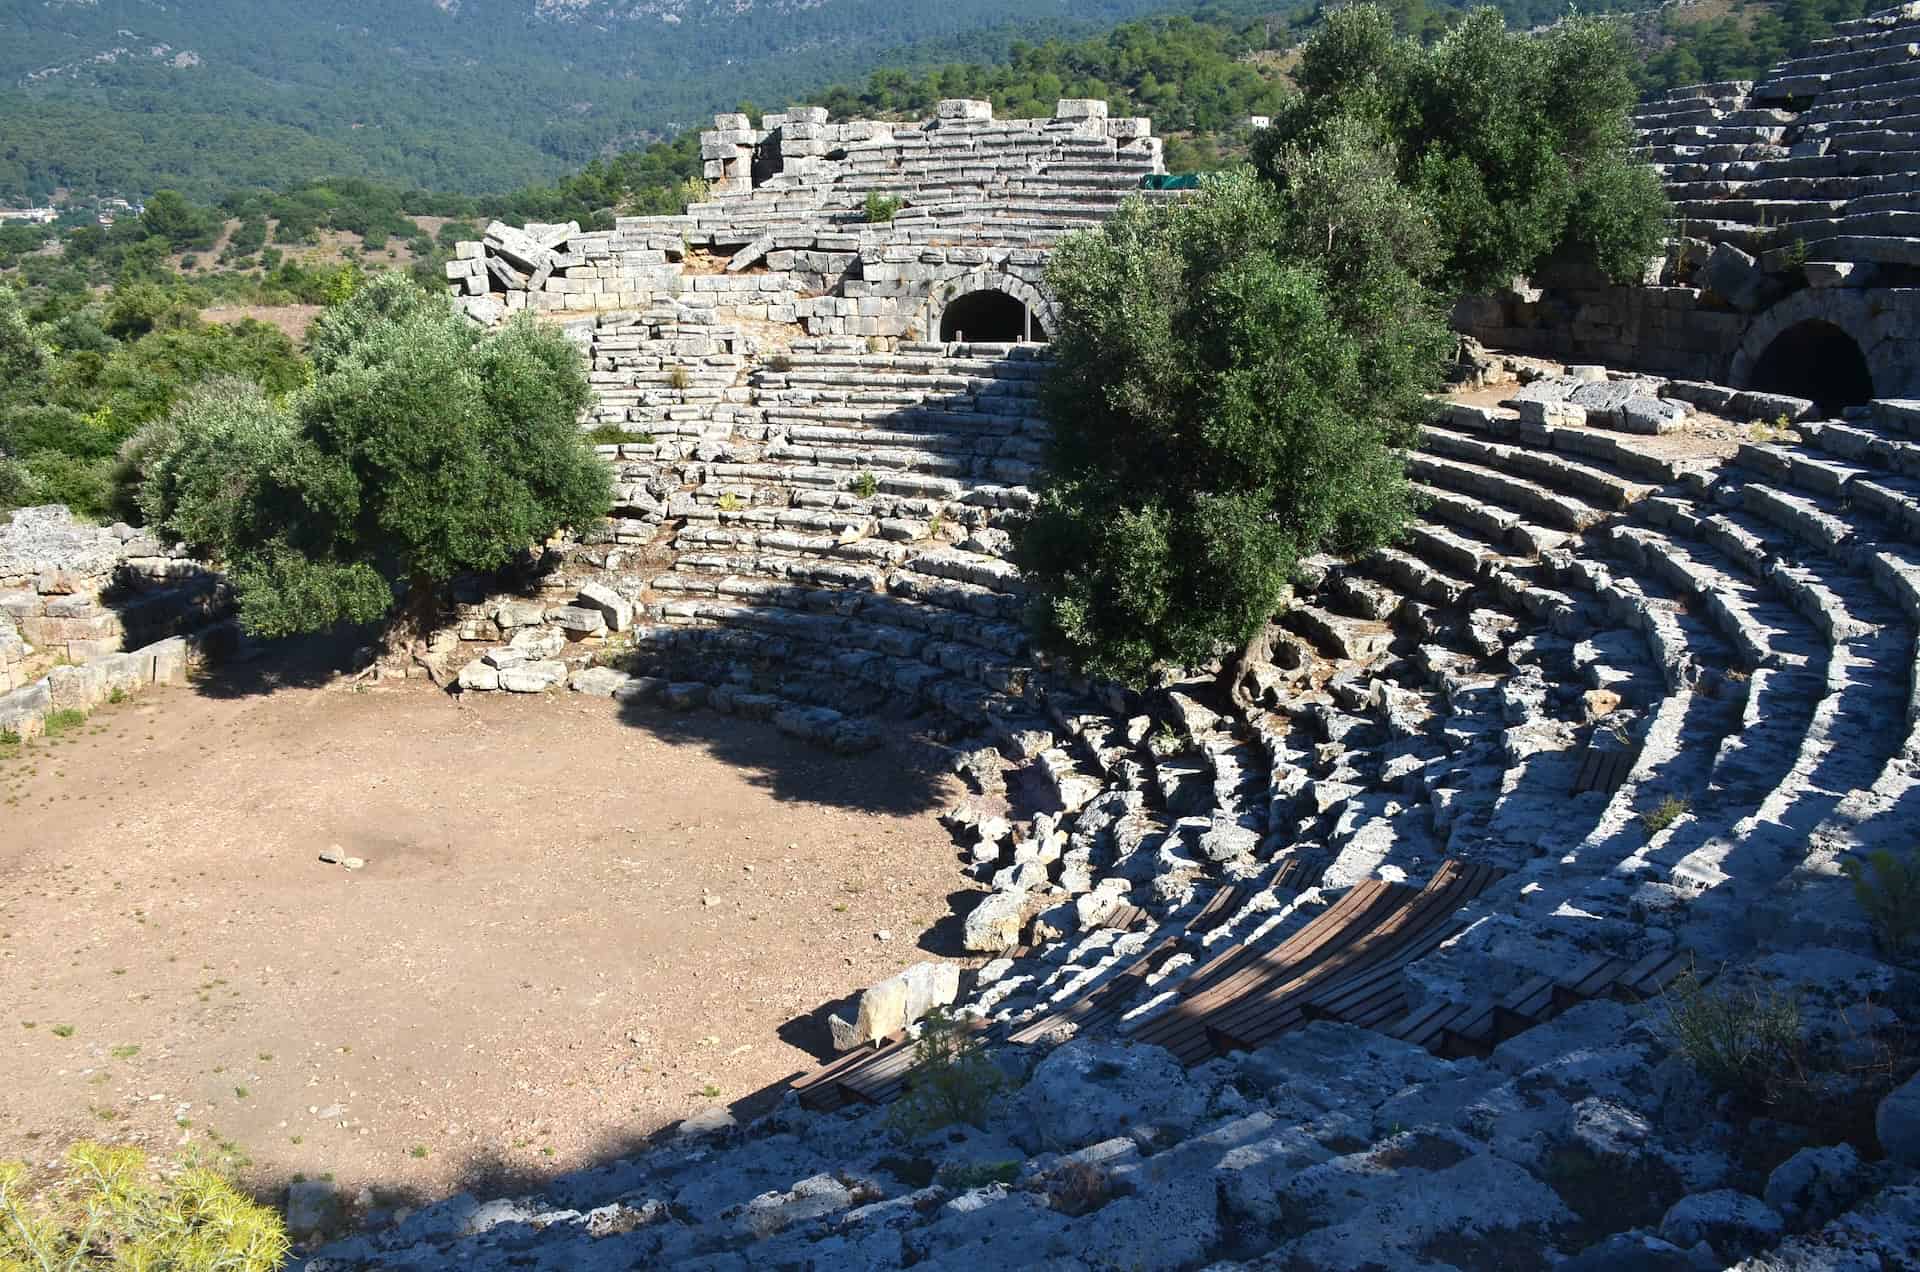 Seating area of the Theatre at Kaunos, Turkey